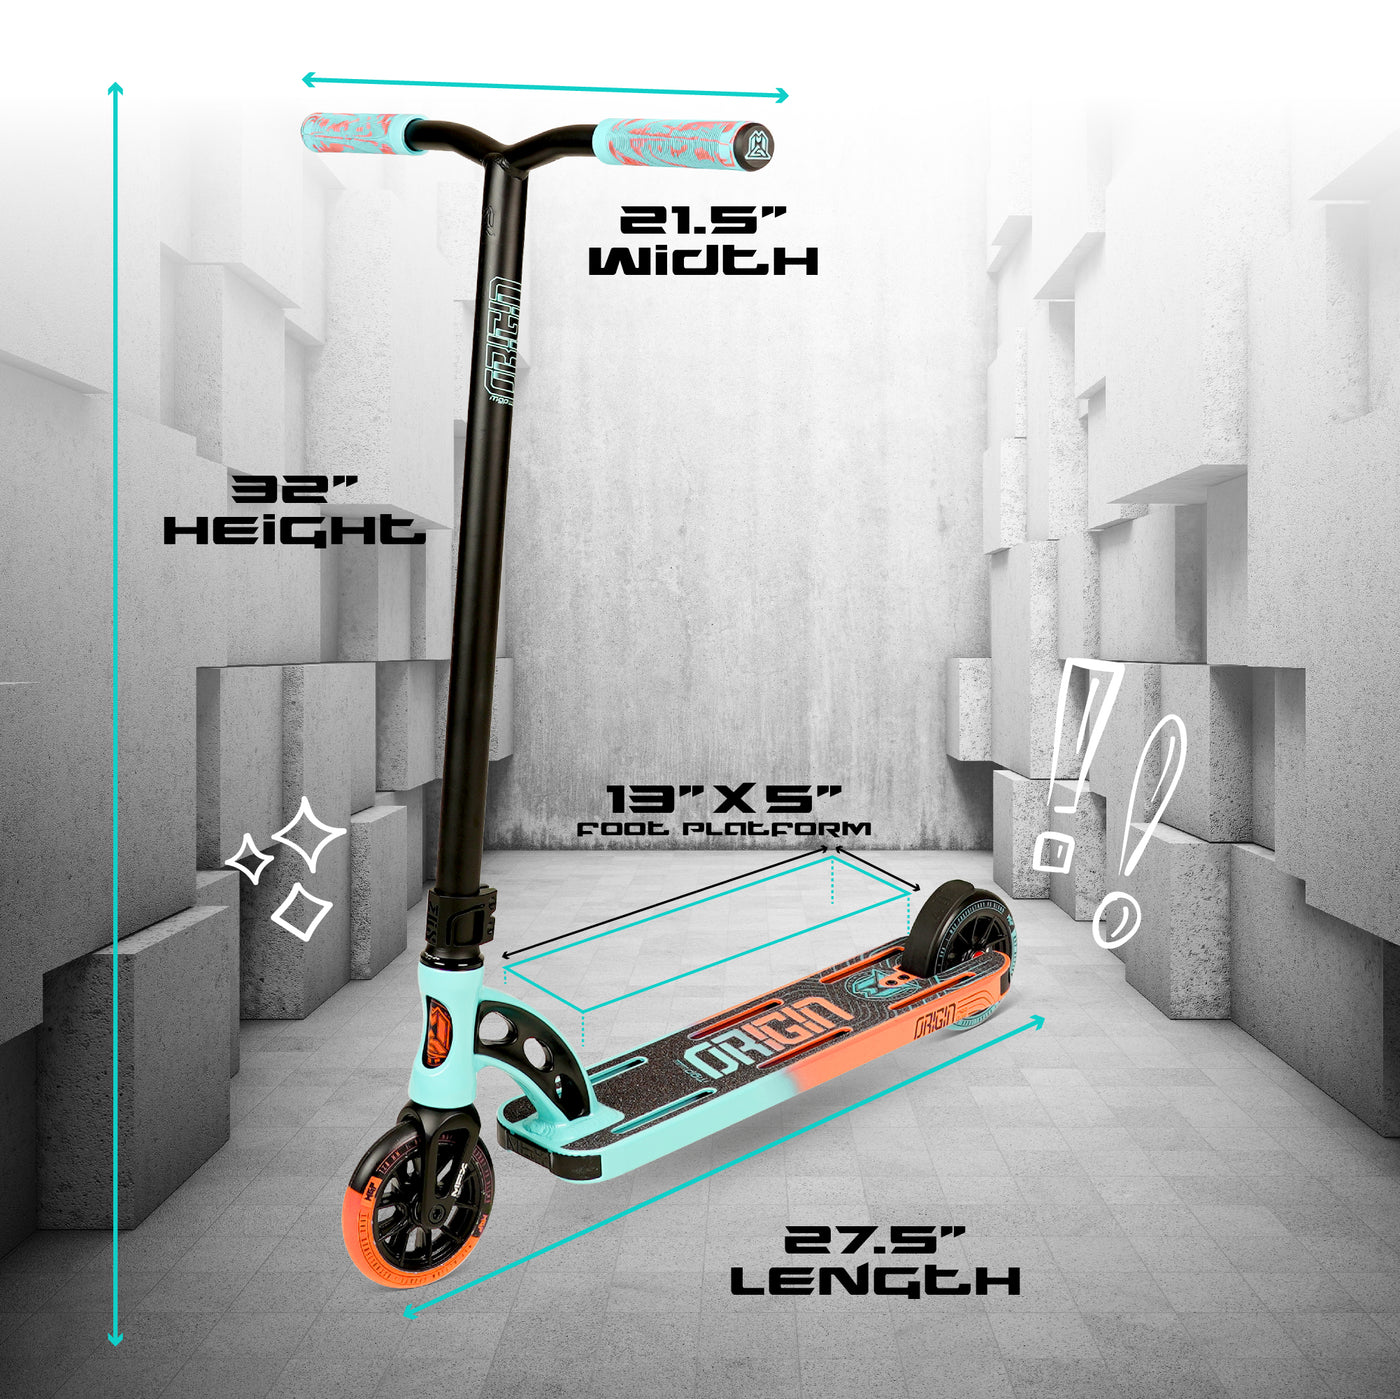 Madd Gear MGP MGO Origin VX10 VX9 Pro Stunt Trick Scooter Complete High Quality Best Razor Skate Park Teal Orange Deck